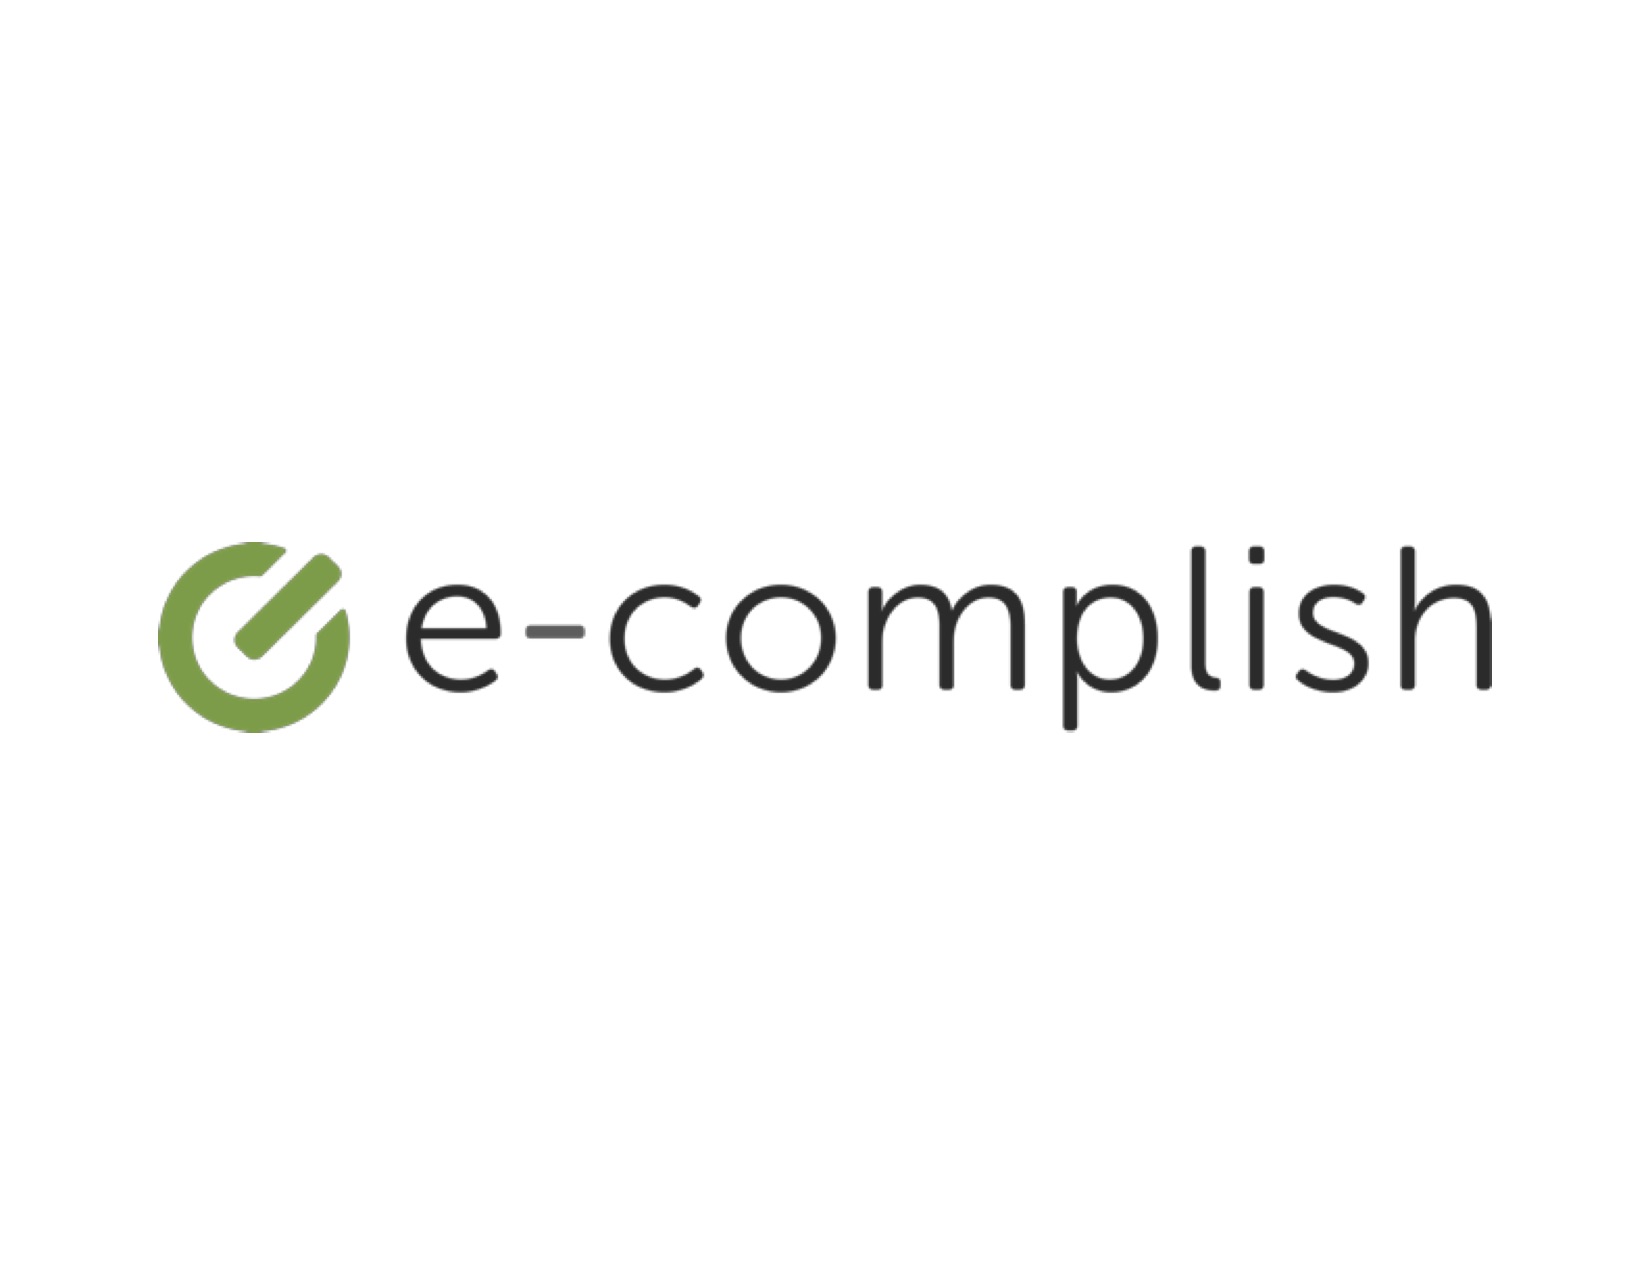 E-complish Logo